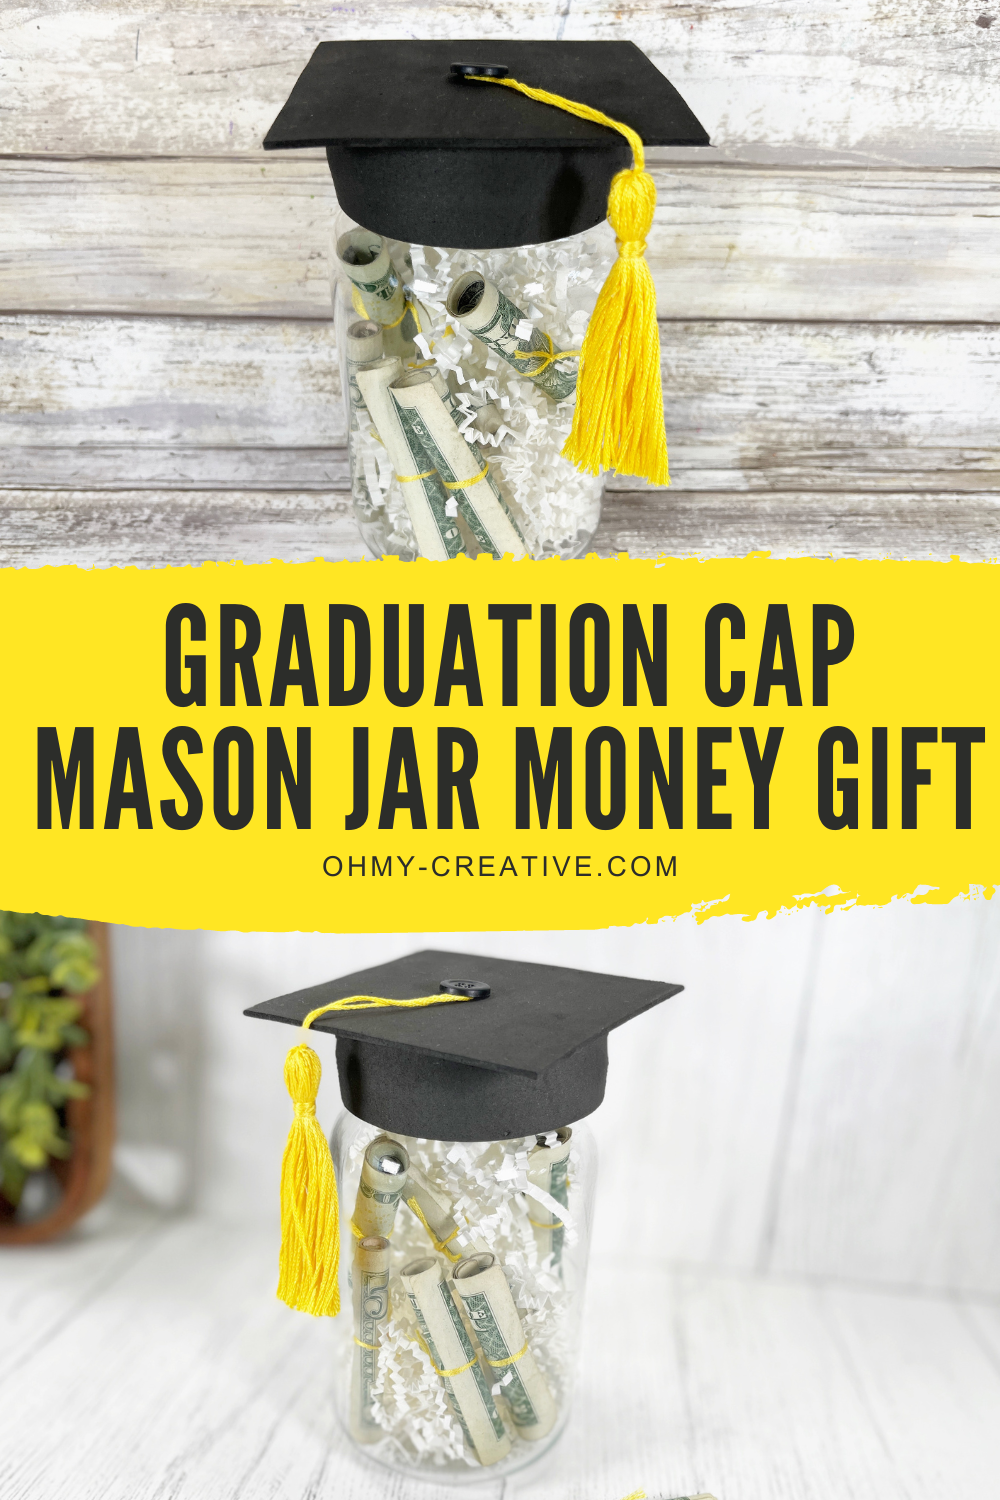 Money Mason Jar Graduation Cap Gift craft with two images